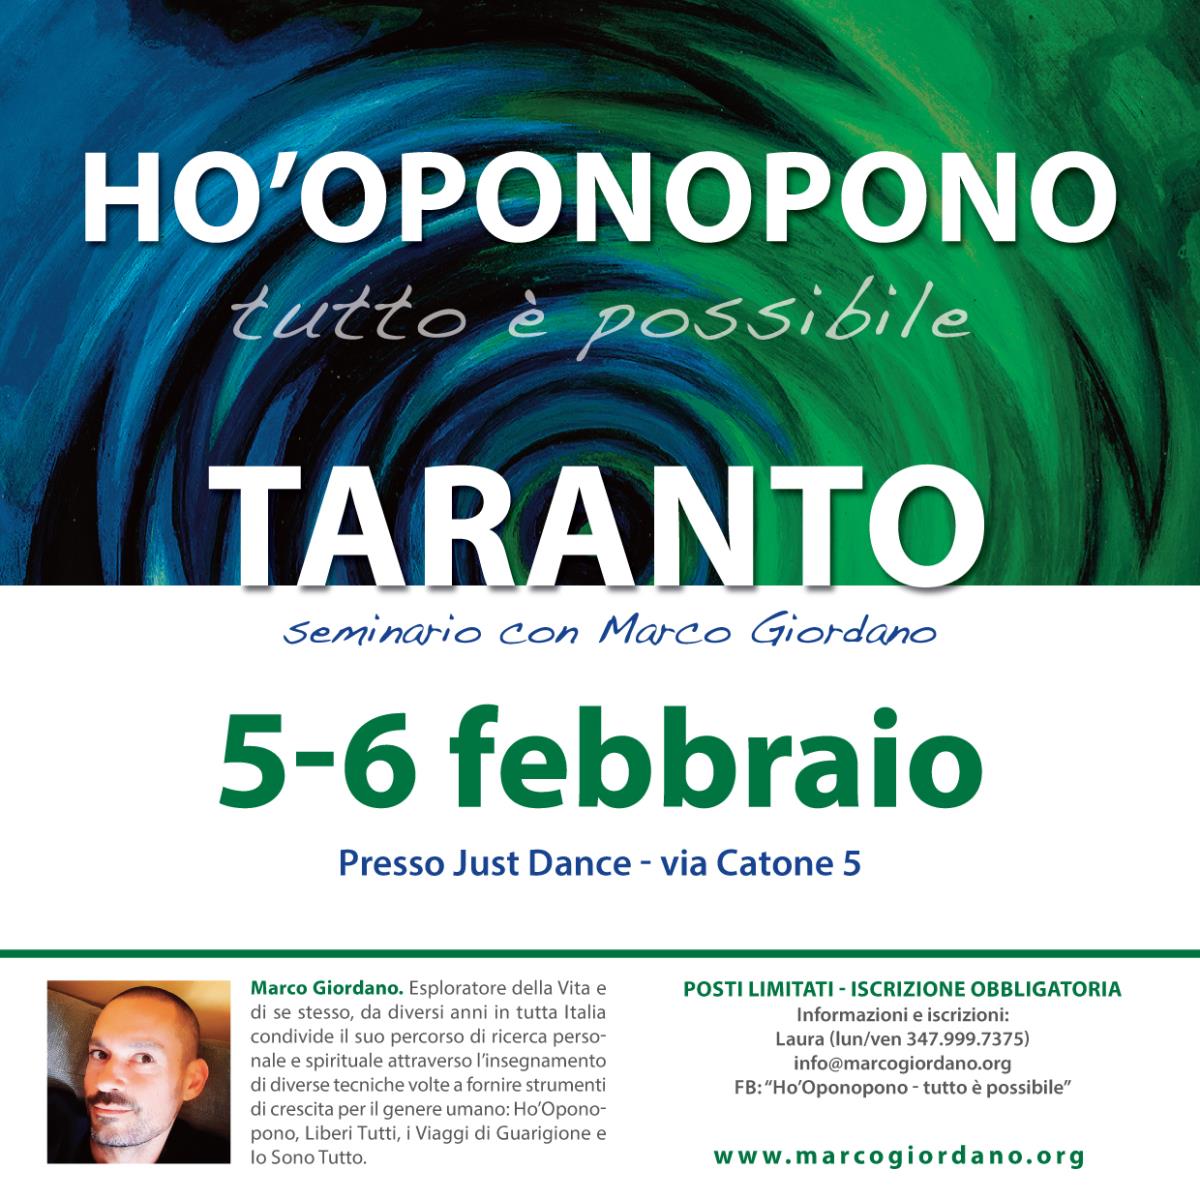 <b>HO'OPONOPONO SEMINARIO</b> 5-6 febbraio <b>TARANTO